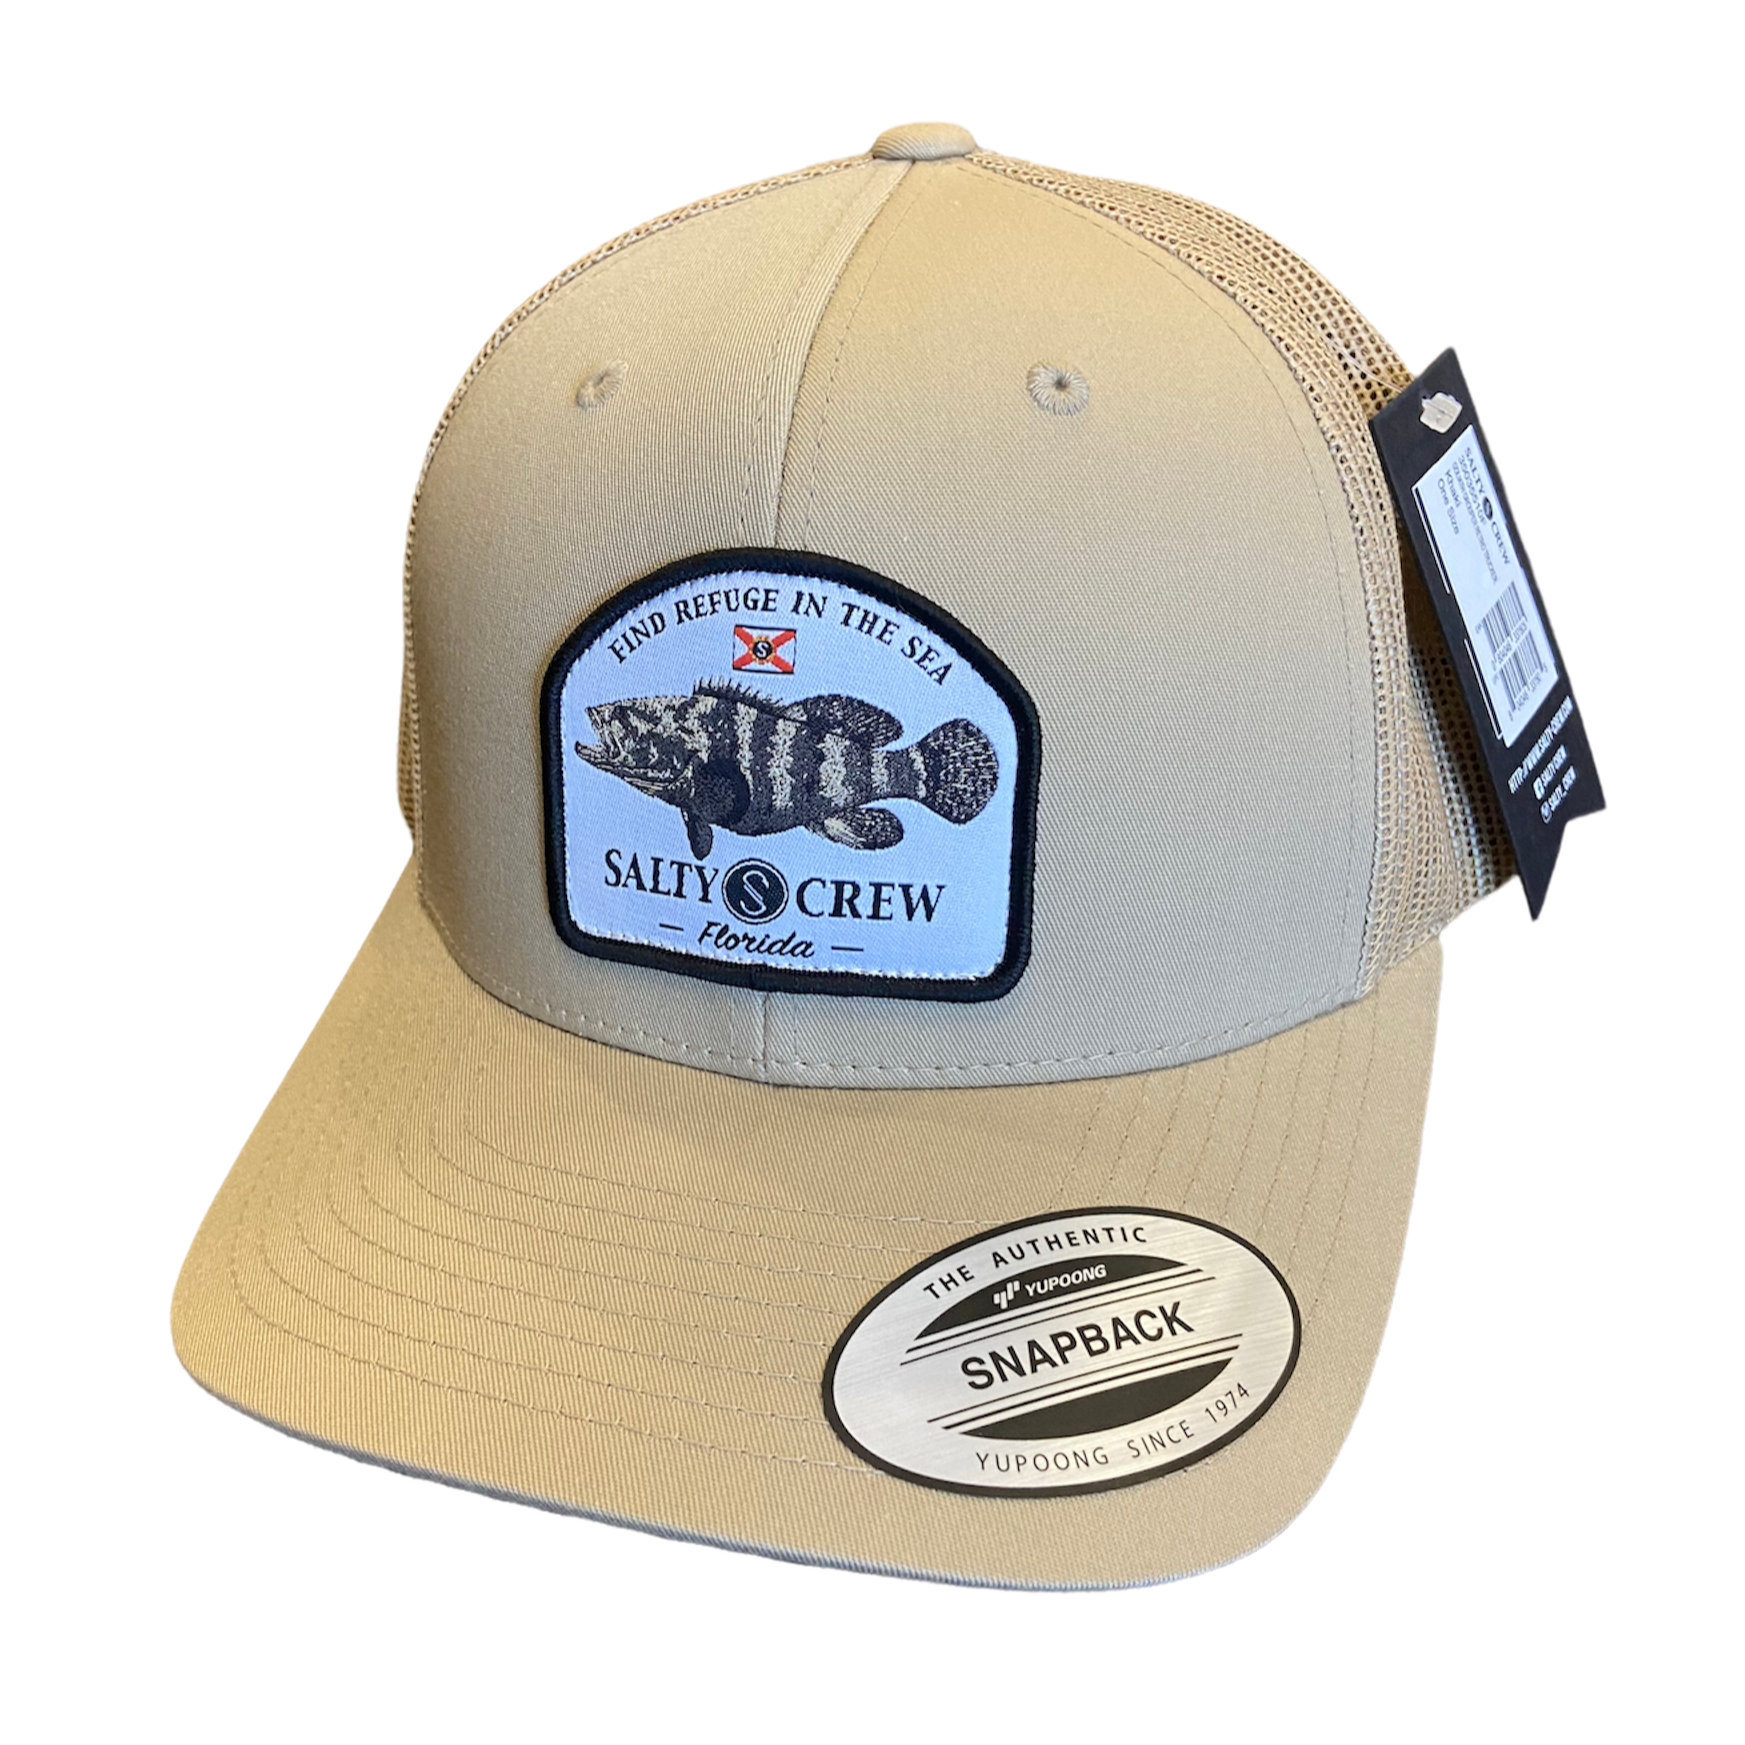 Find Your Coast Fishing Flexfit Trucker Hats Caramel